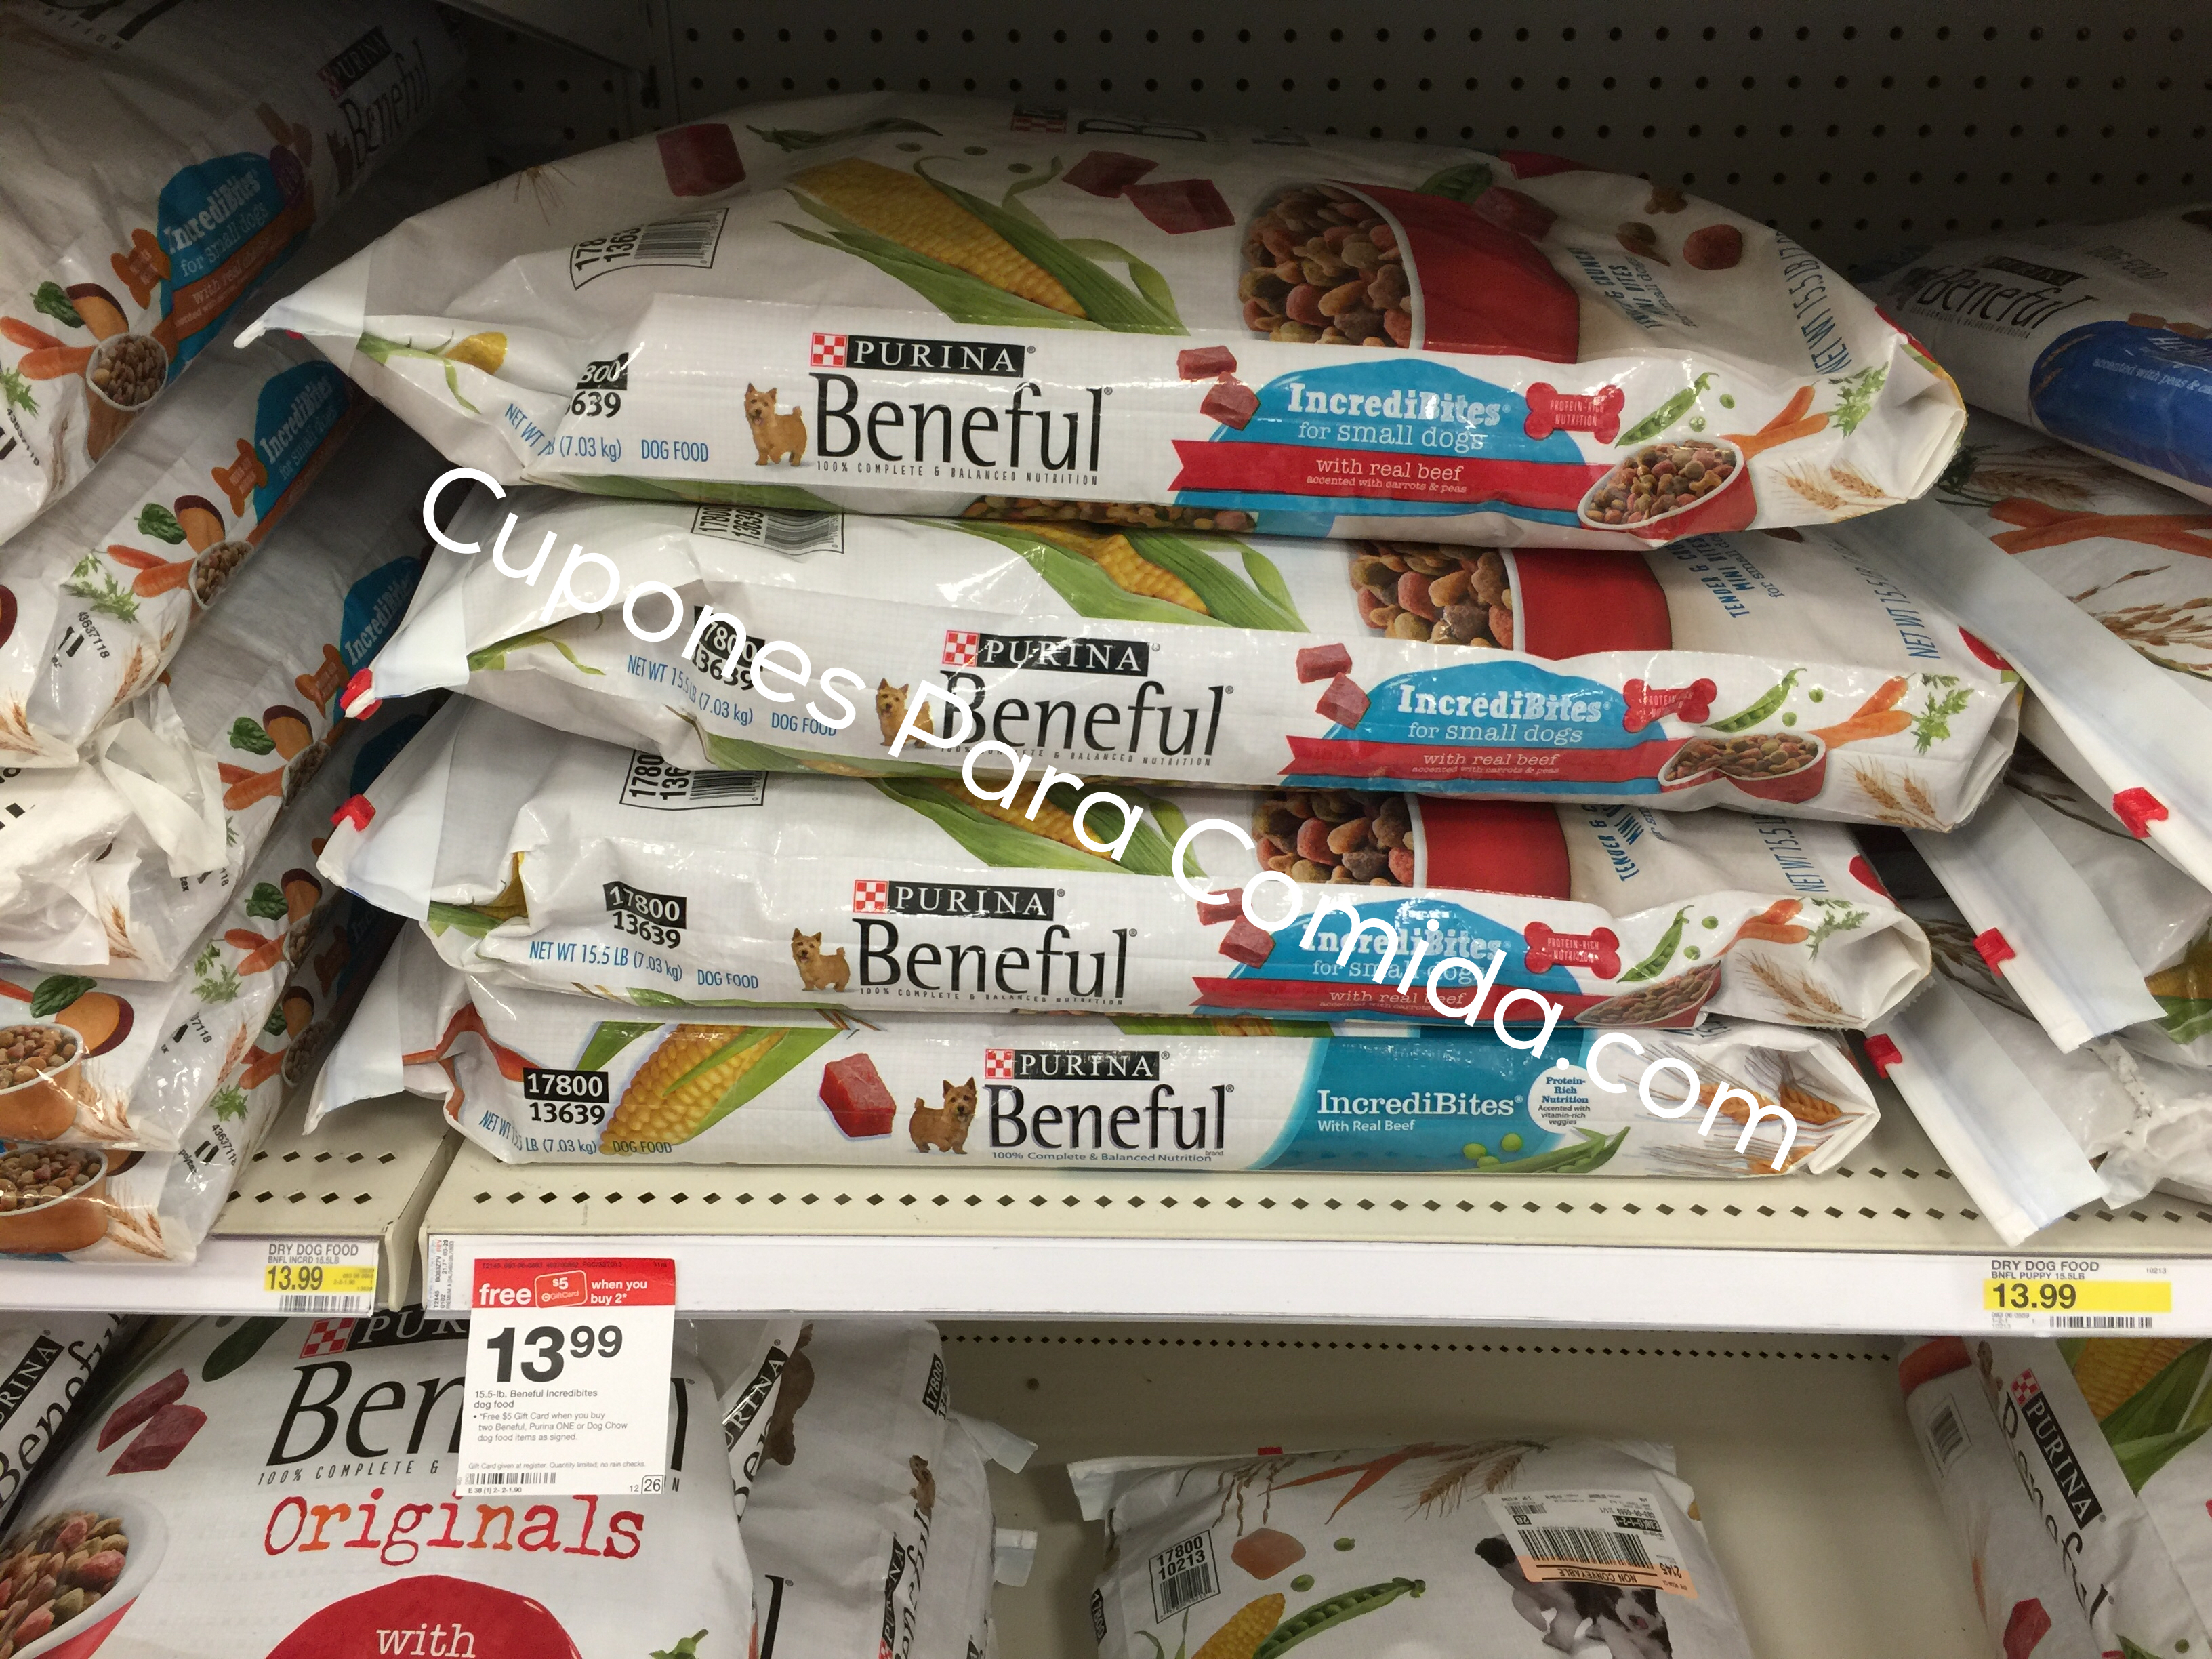 PUrina beneful dog food 11/30/15